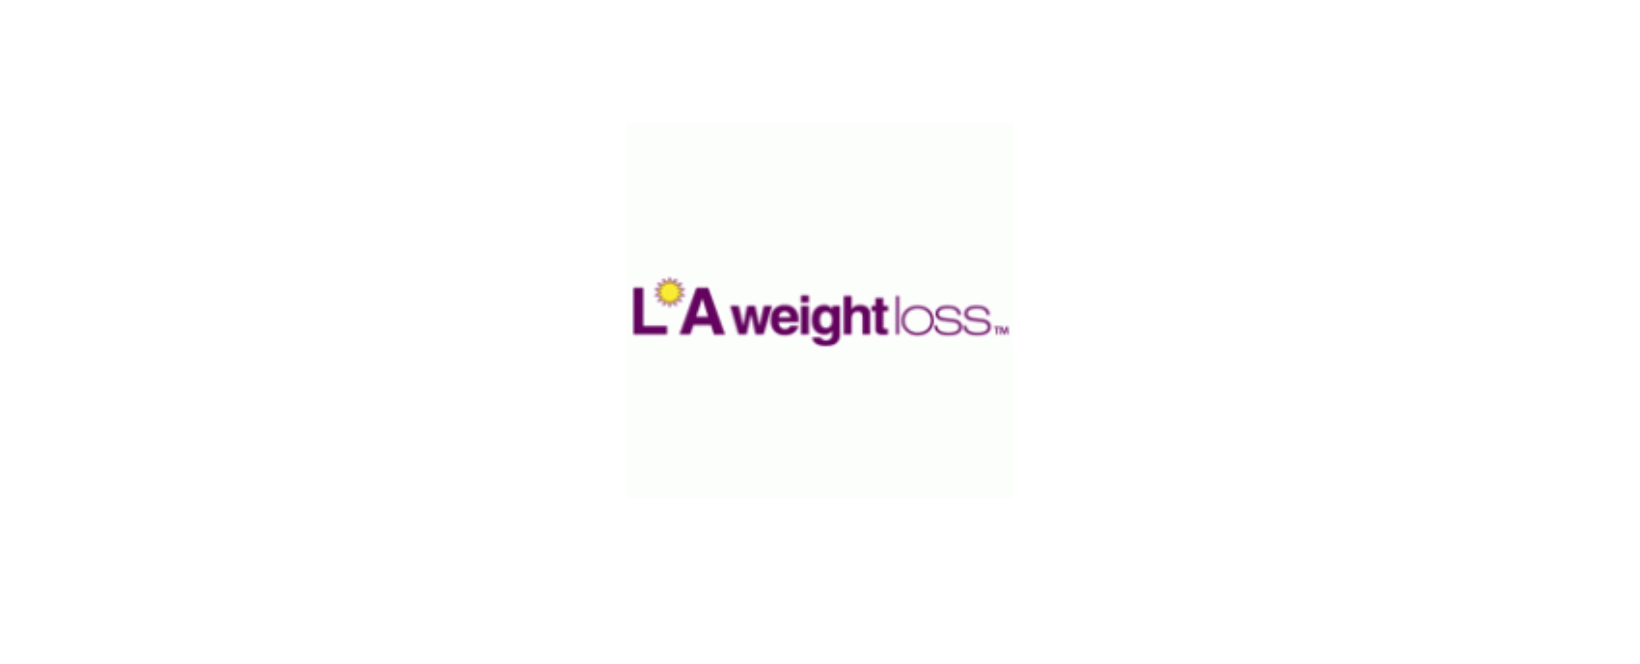 LA Weight Loss Discount Code 2022